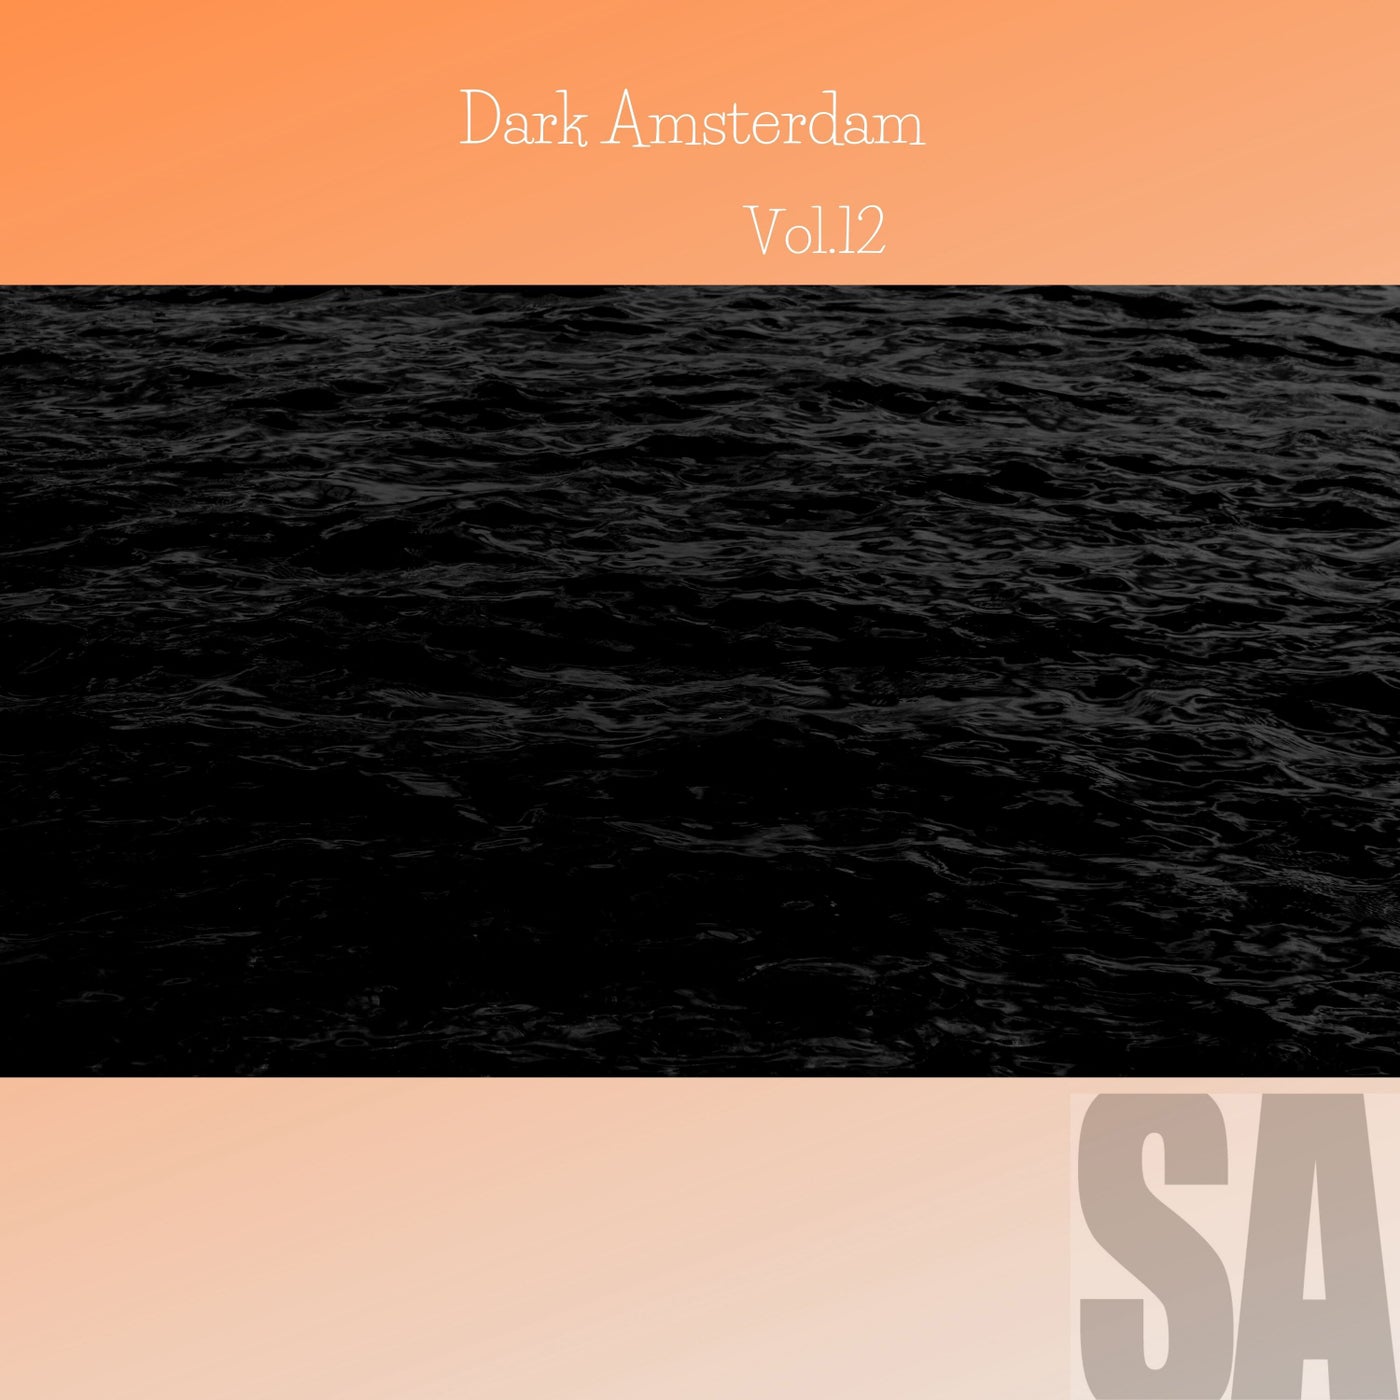 Dark Amsterdam, Vol.12